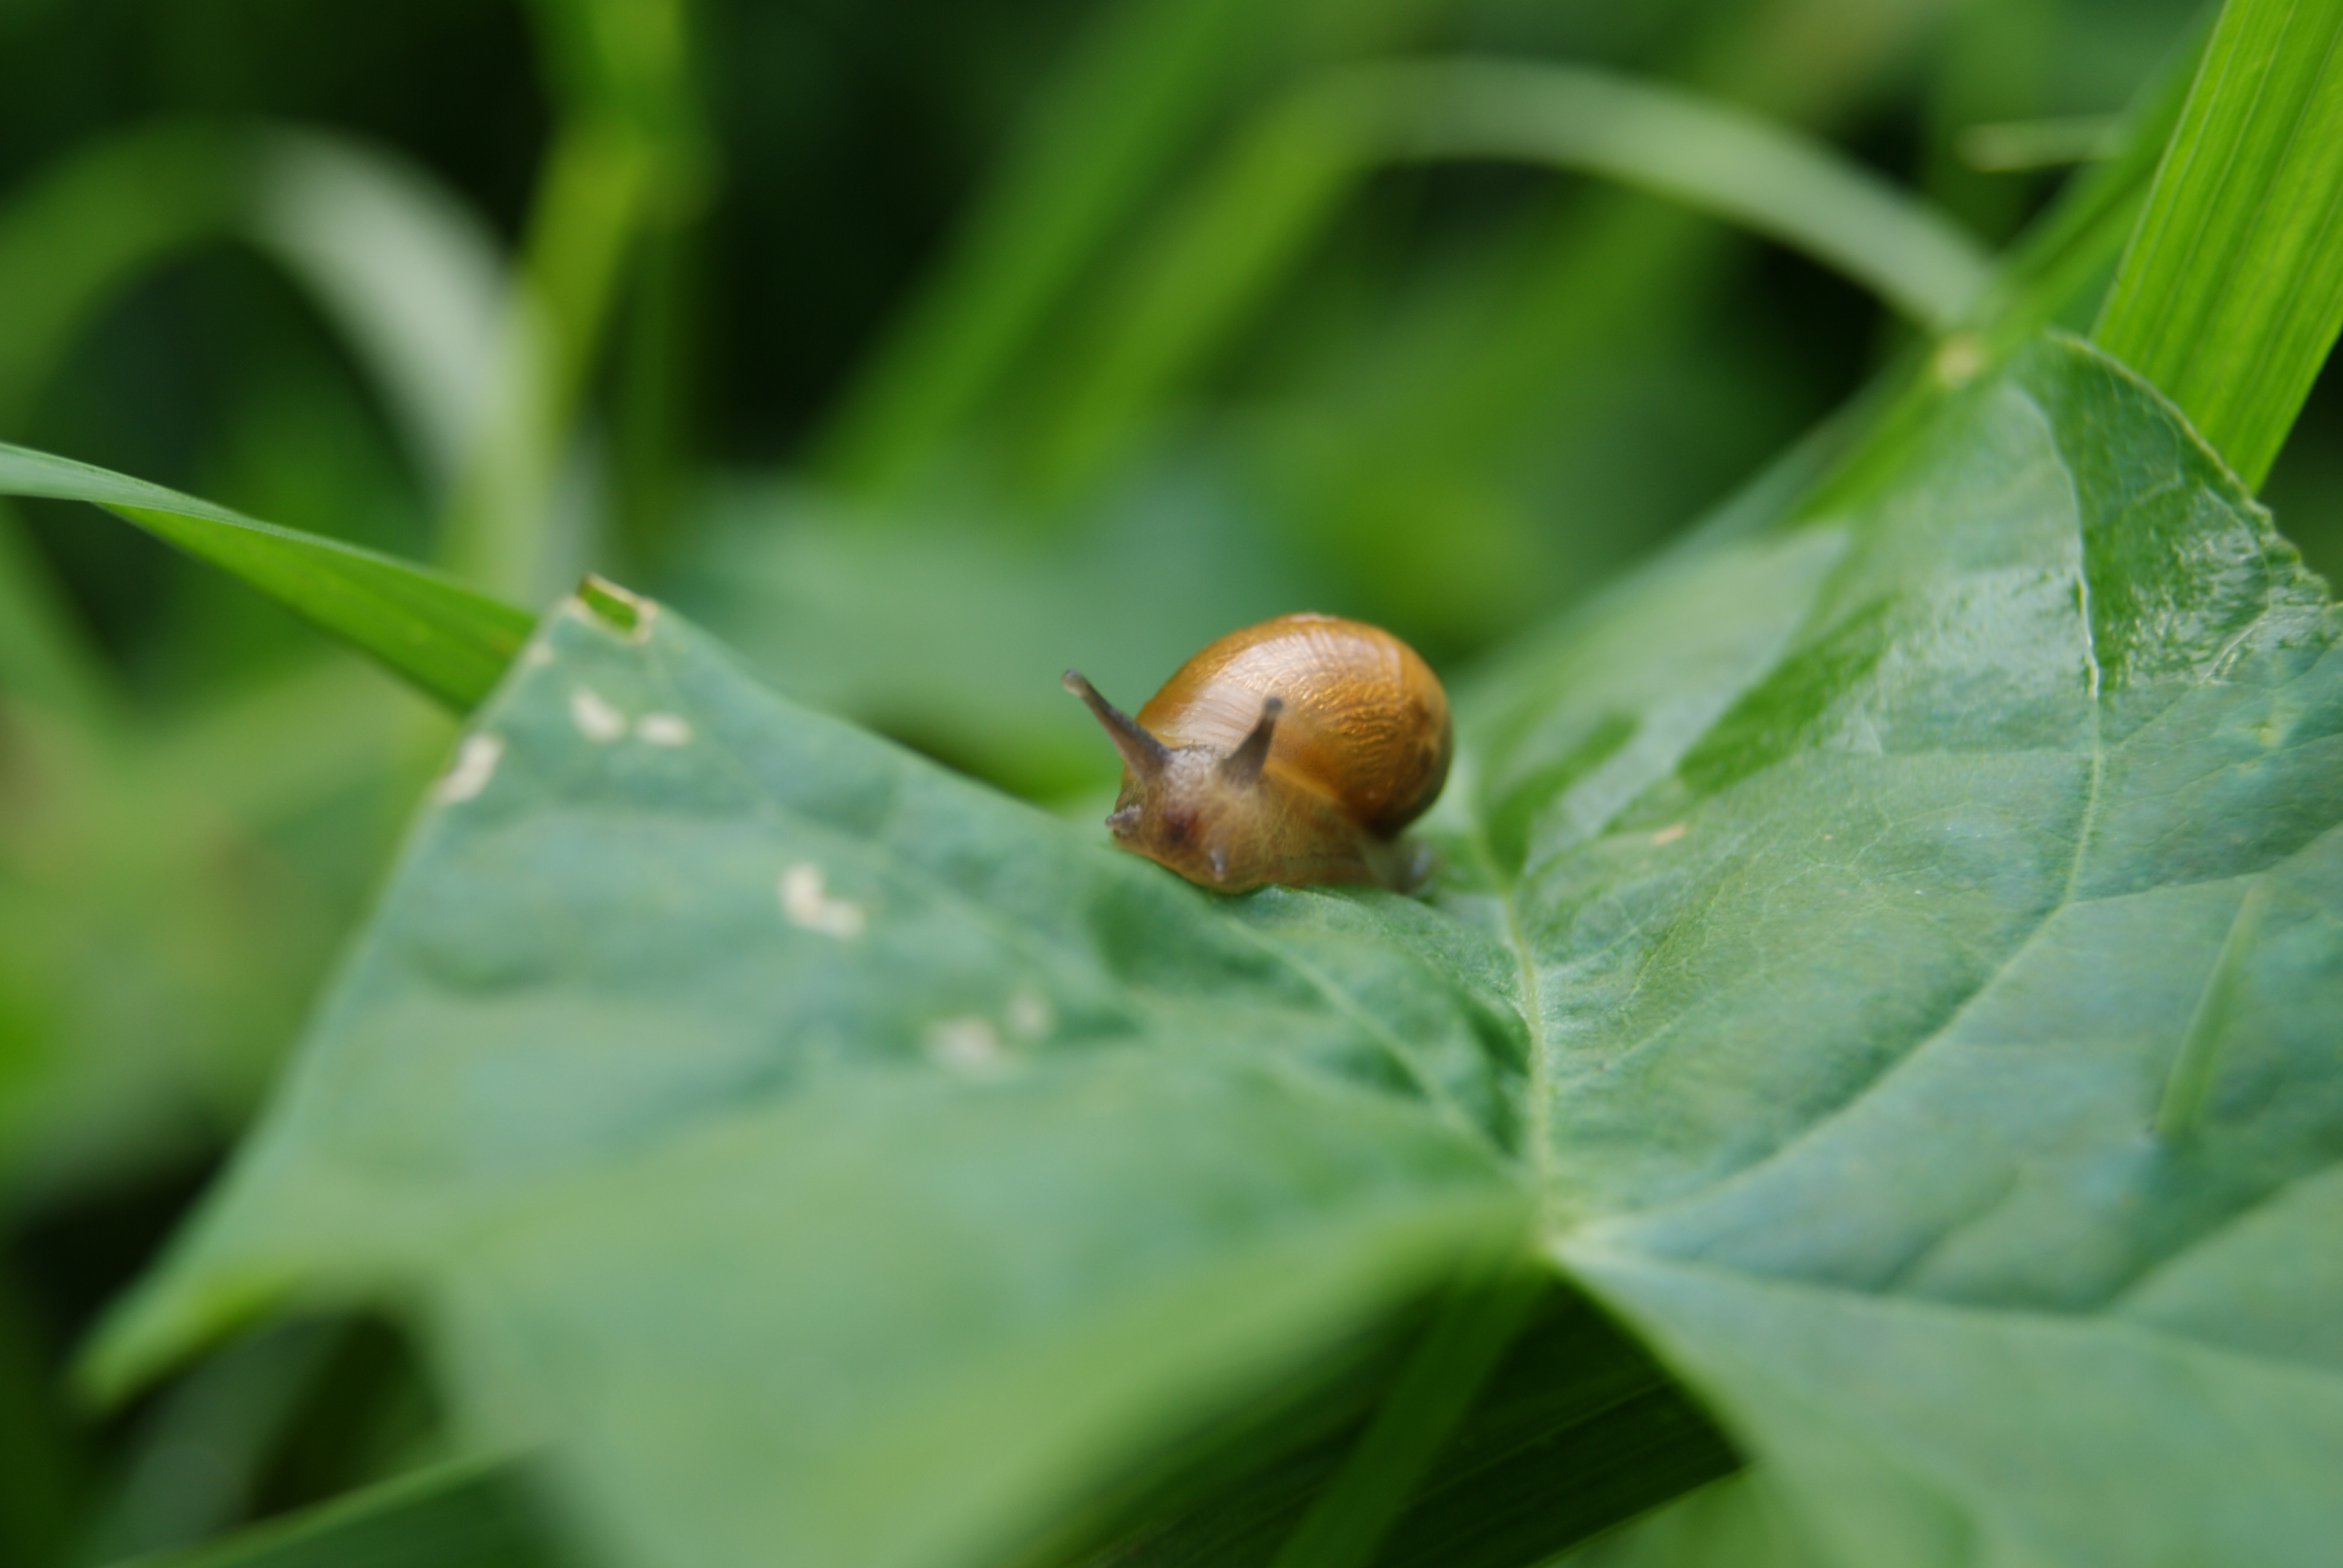 brown snail on green leaf plant